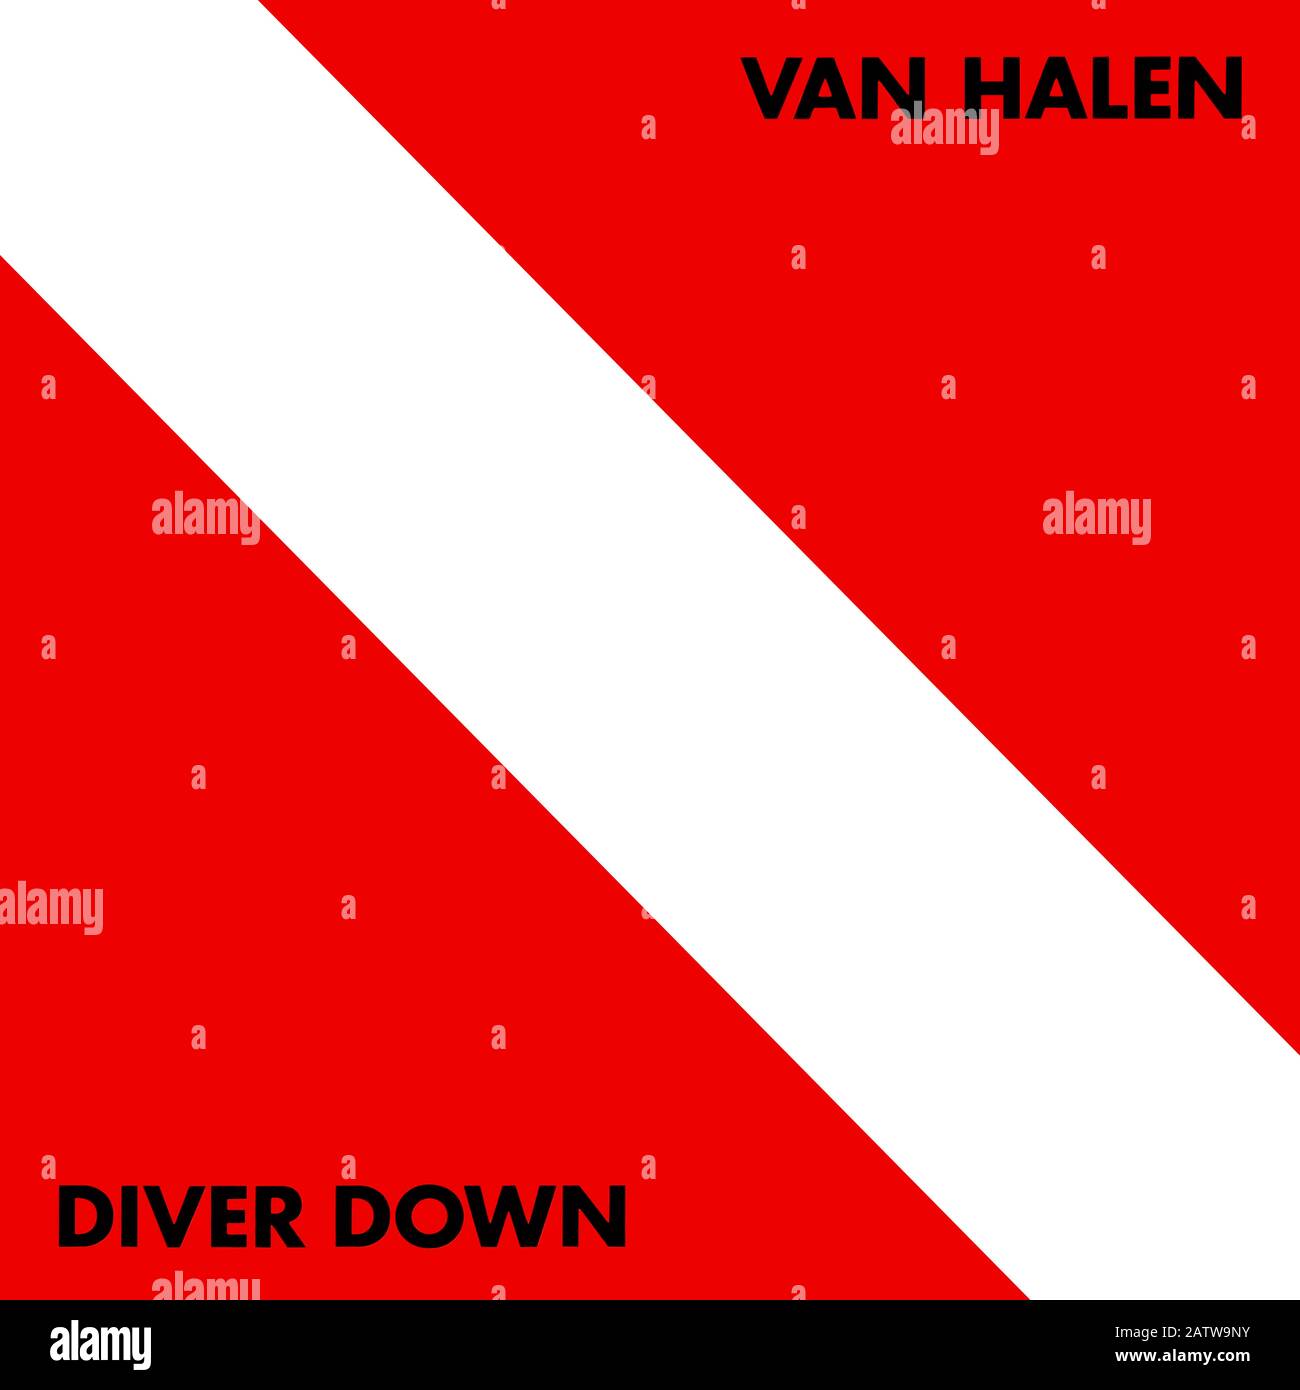 Van Halen - original vinyl album cover - Diver Down - 1982 Stock Photo